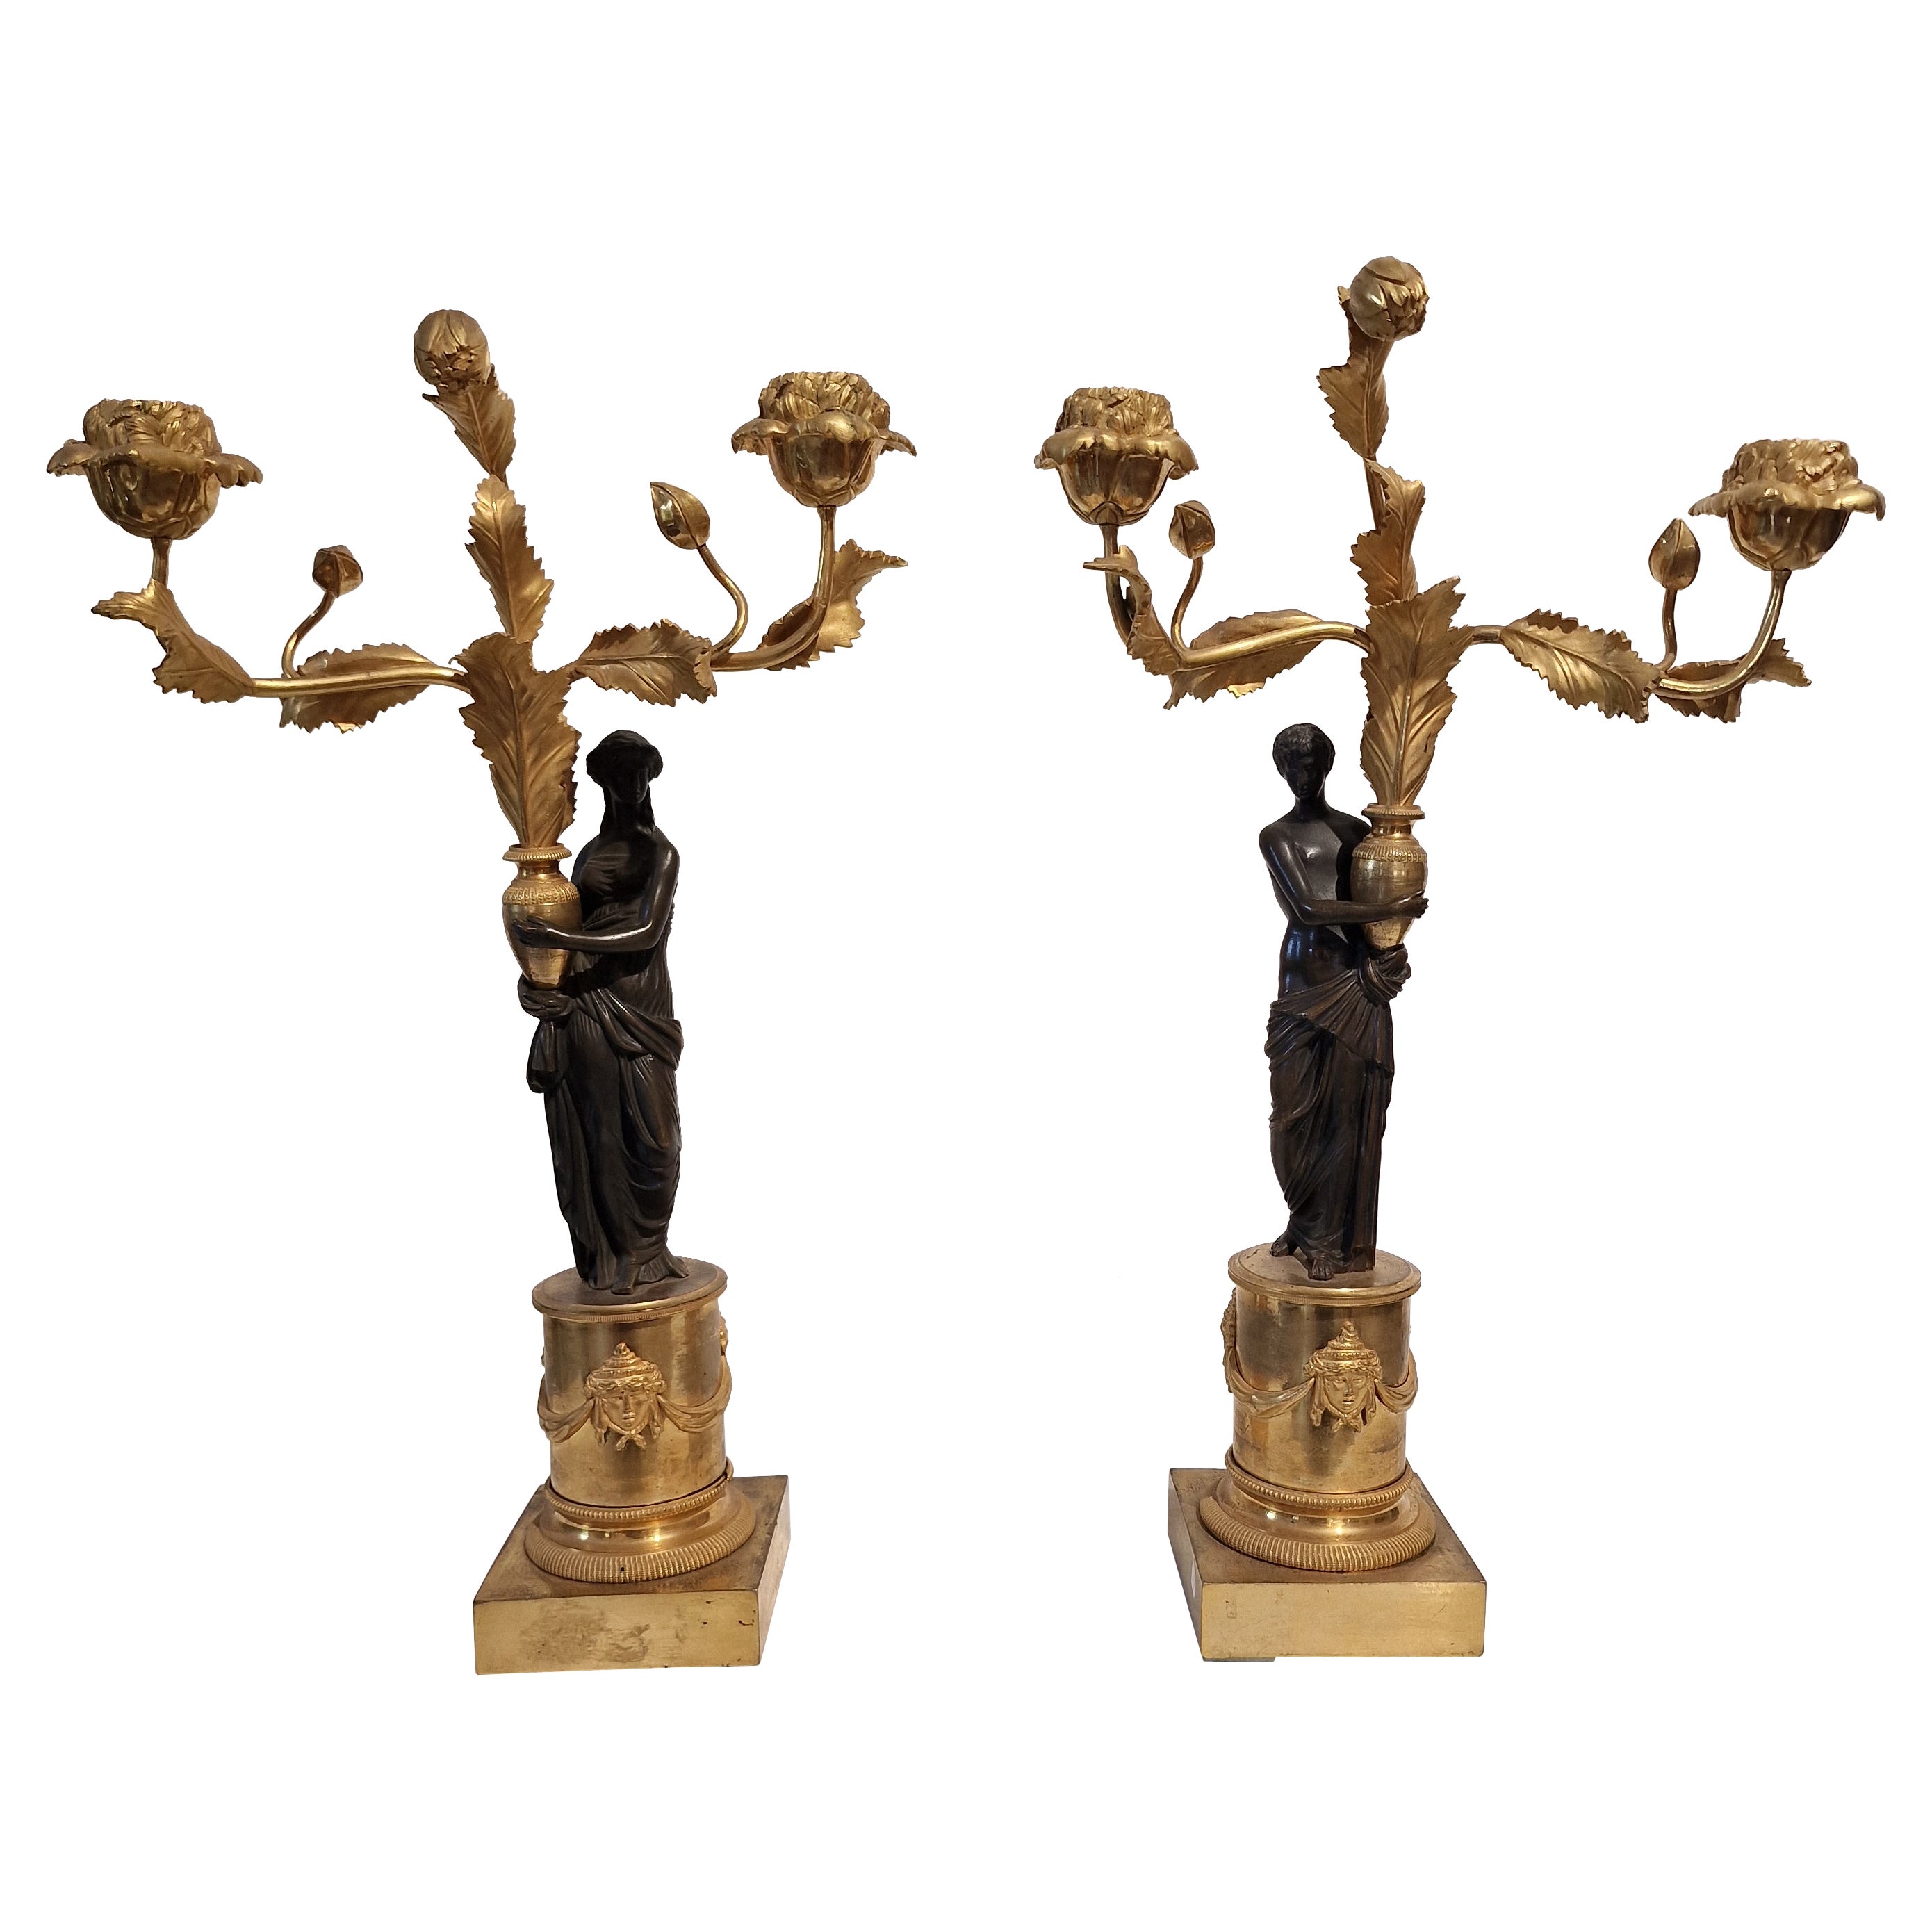 Pair of Girandoles, Candle sticks, Candelabras, bronze, ~ 1810 Empire, France For Sale